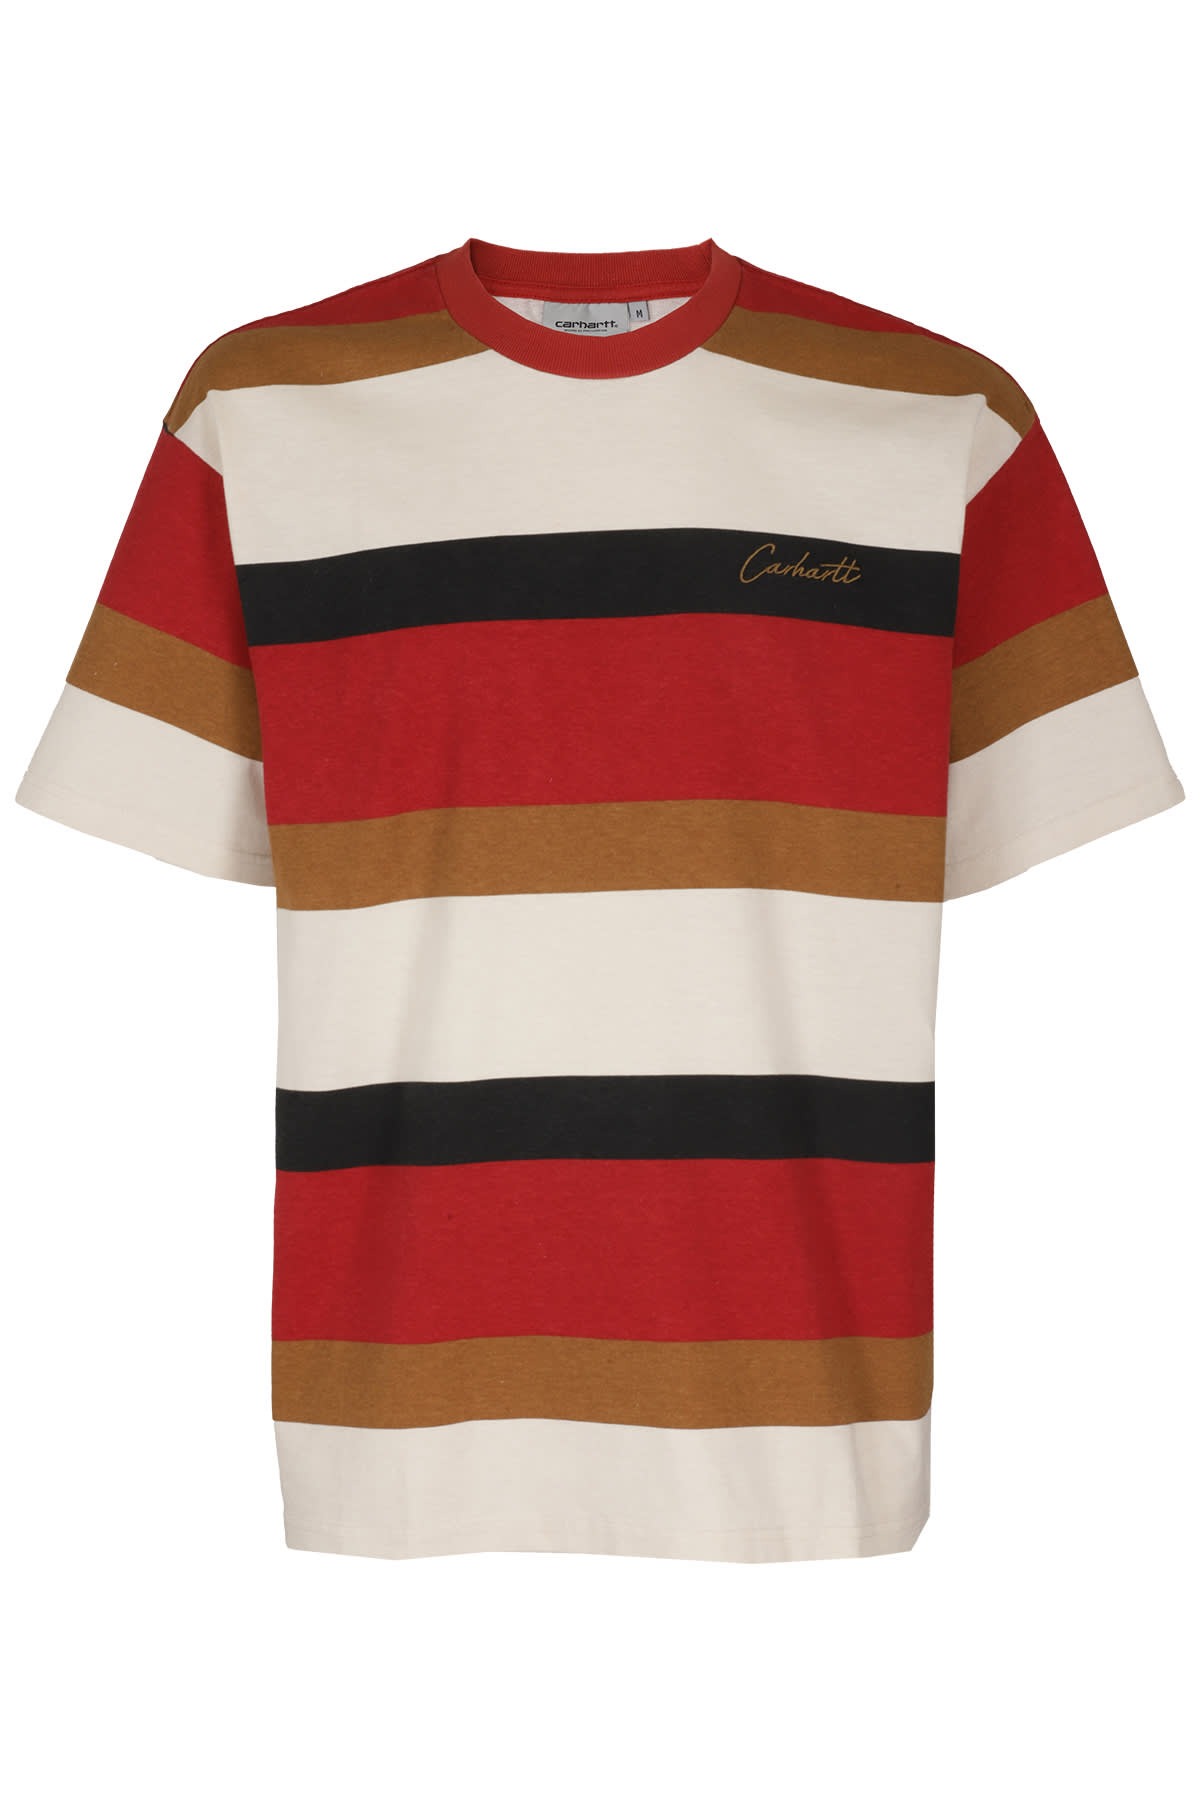 crouser Stripe Cotton T-shirt